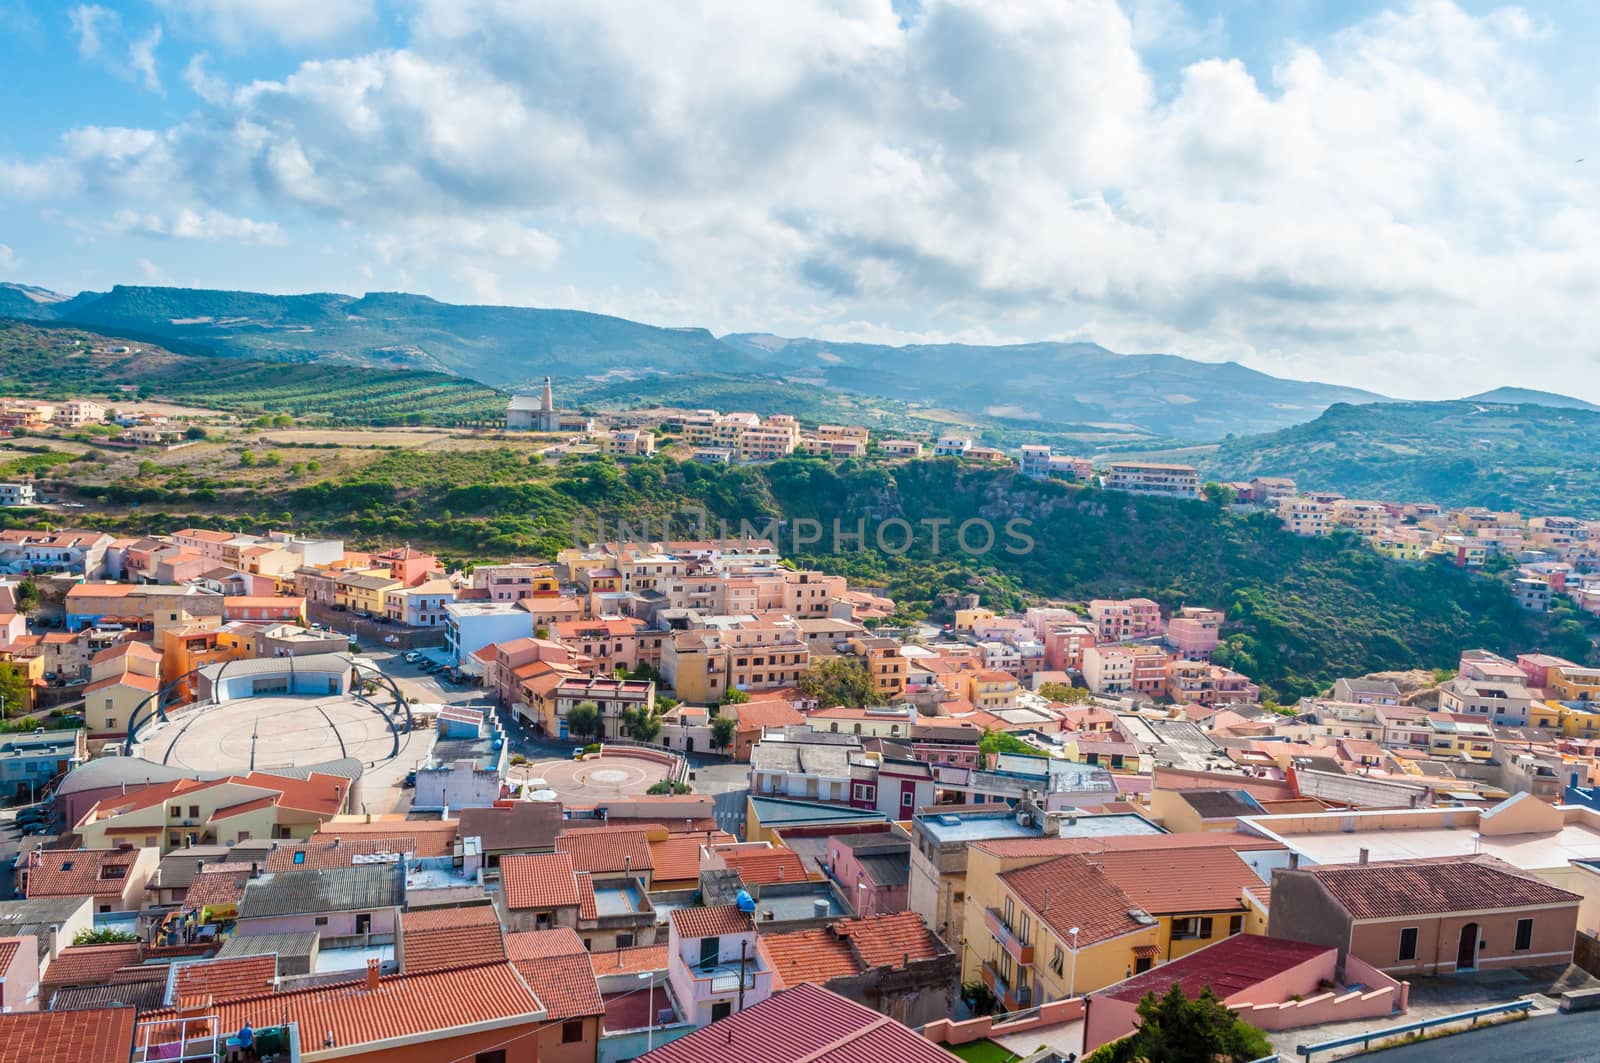 View from castelsardo old city - Sardinia - Italy